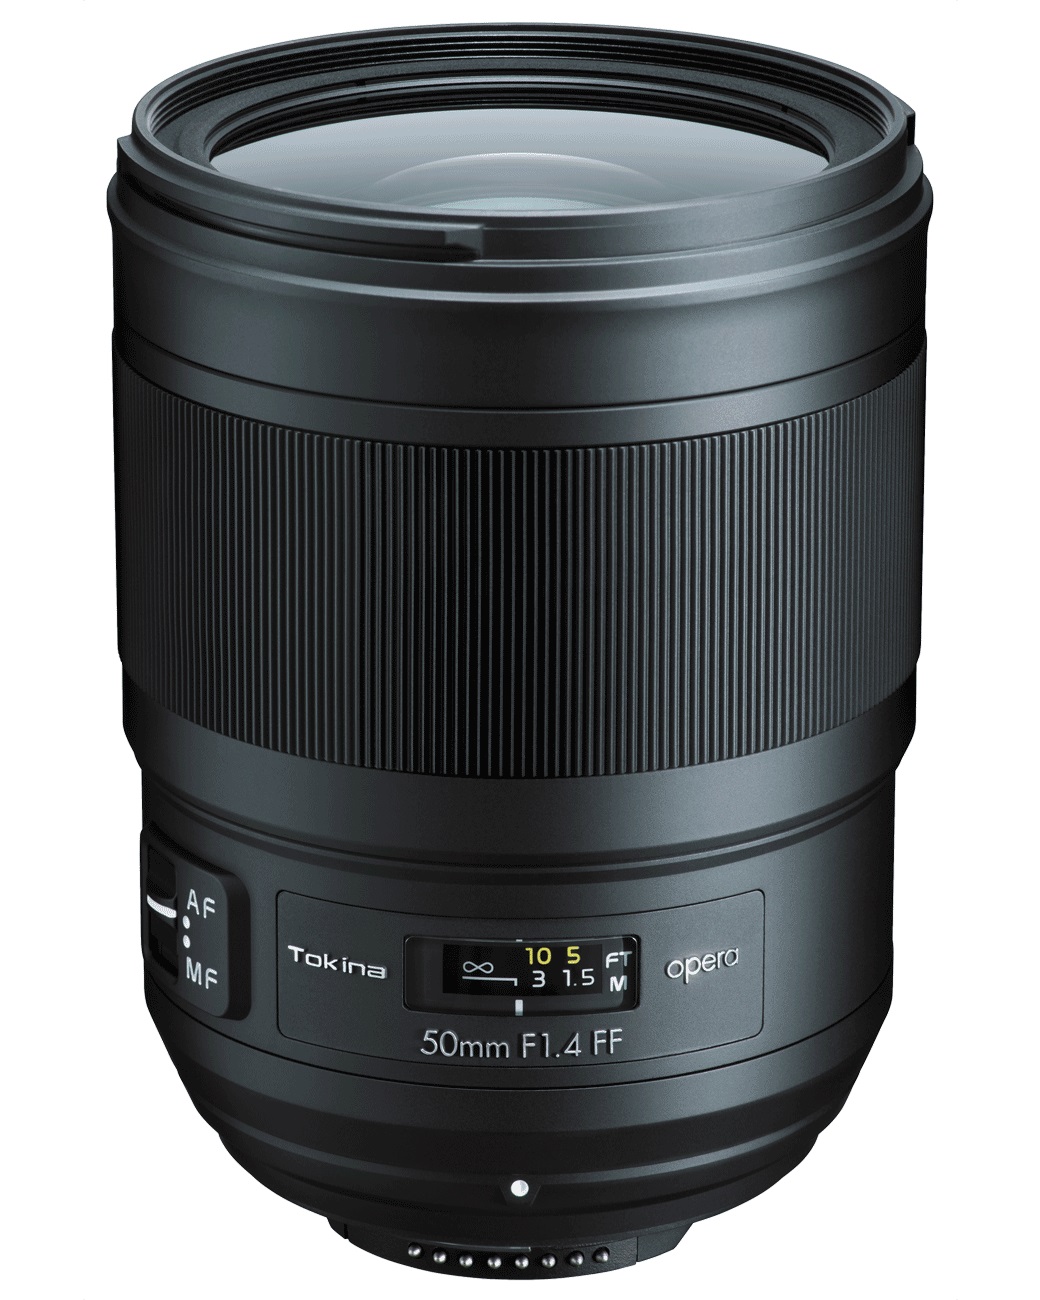 Объектив Tokina Opera 50mm F1.4 FF AF для Canon lens hood replace hb 47 hb47 for nikon af s 50mm f1 4g f 1 4g 50mm f1 8g f 1 8g yongnuo 50mm f 1 8